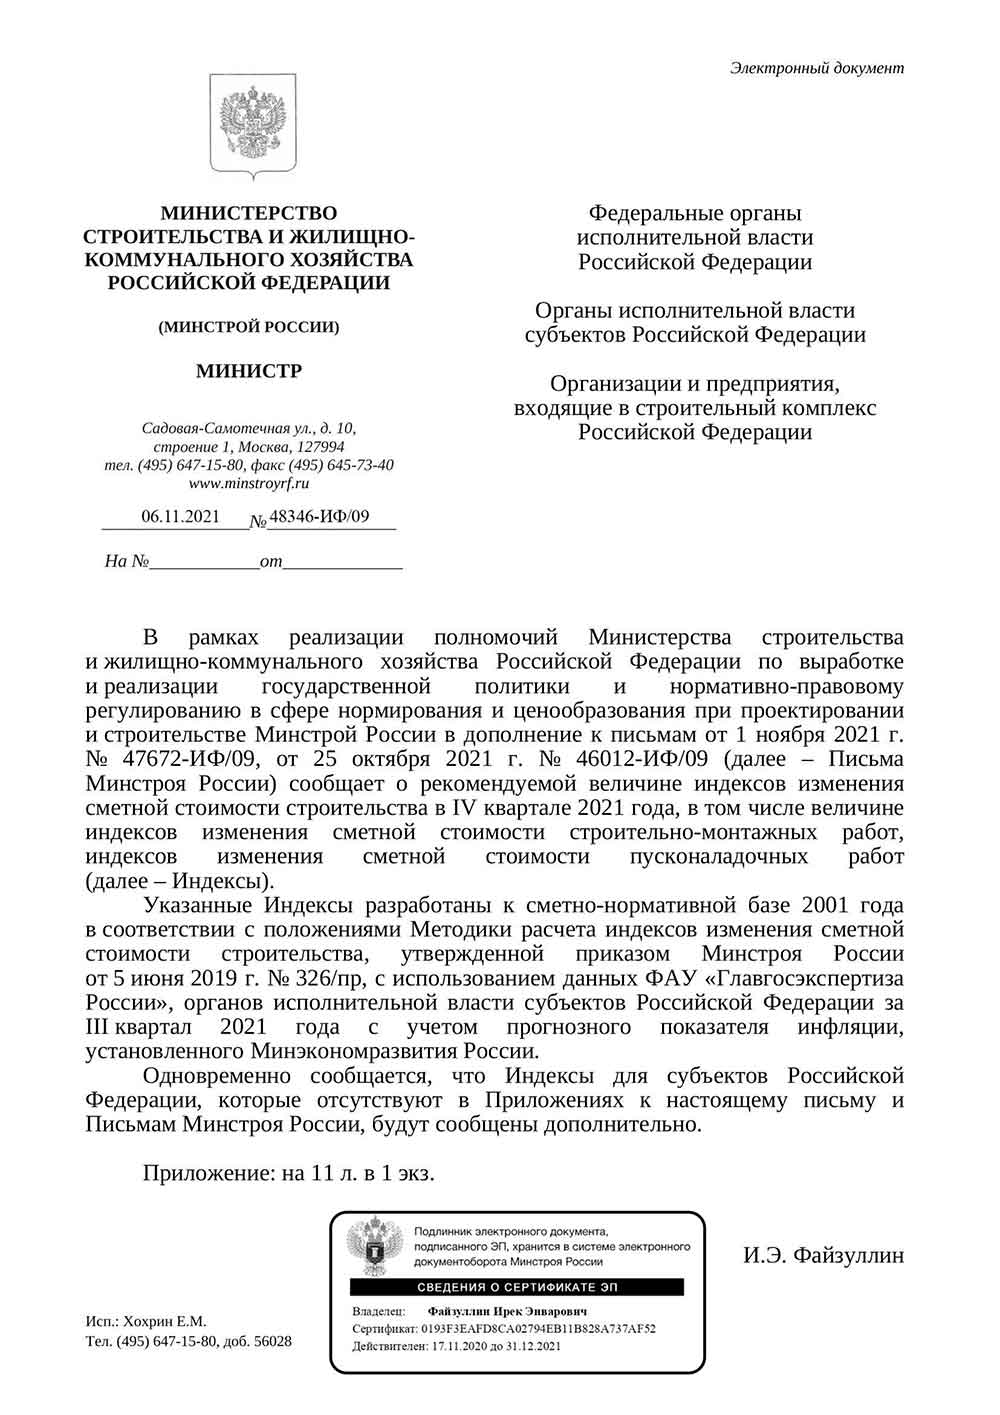 Письмо Минстроя РФ №48346-ИФ/09 от 06.11.2021 г.